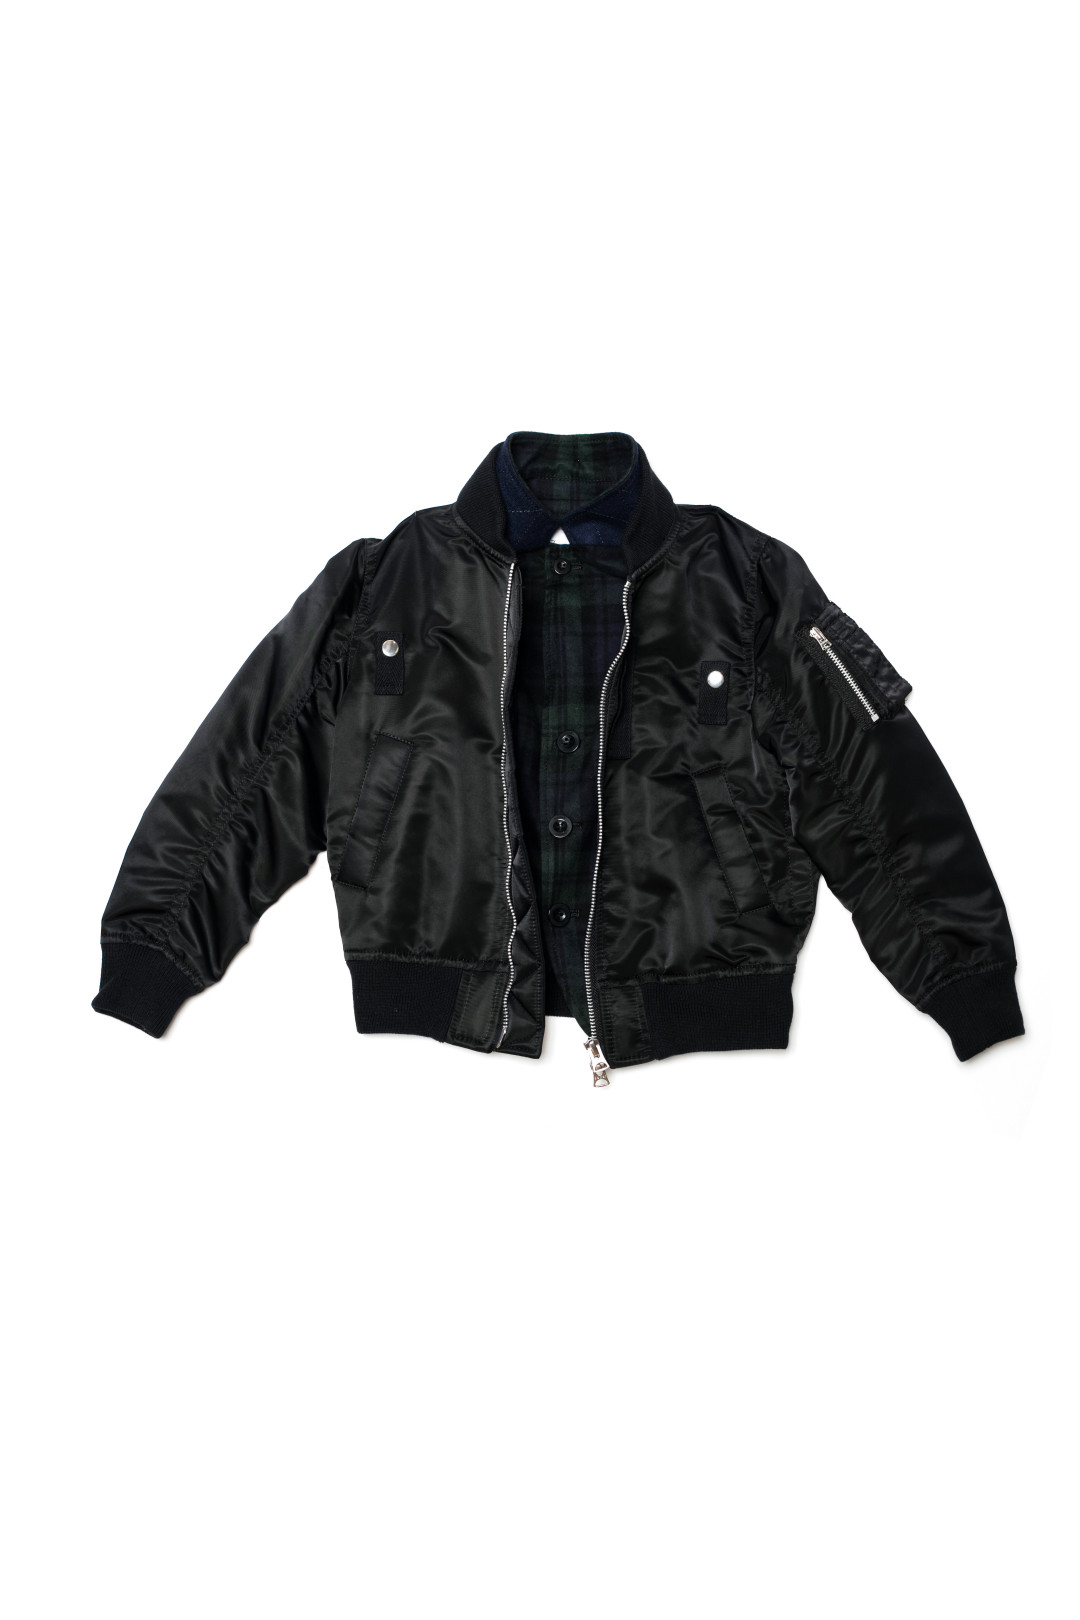 Jacket 17-00016K/Black 5万4,000円